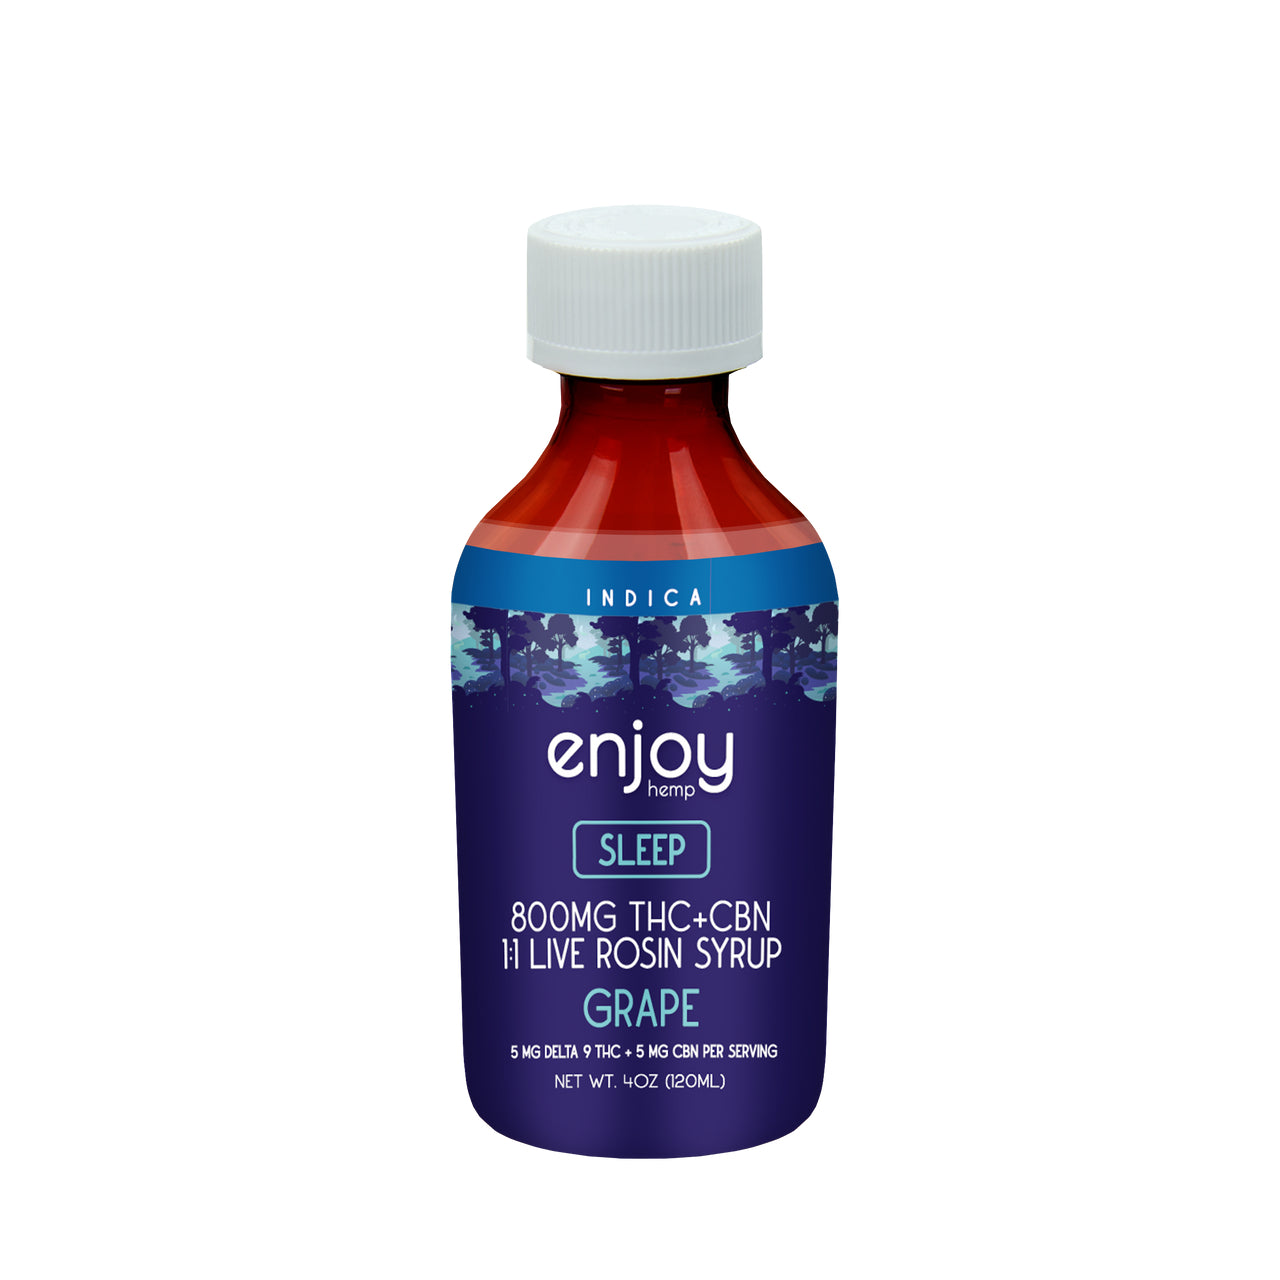 800 mg Live Rosin Delta 9 THC + CBN Syrup for Sleep - Grape (Indica) - Triangle Hemp Wellness